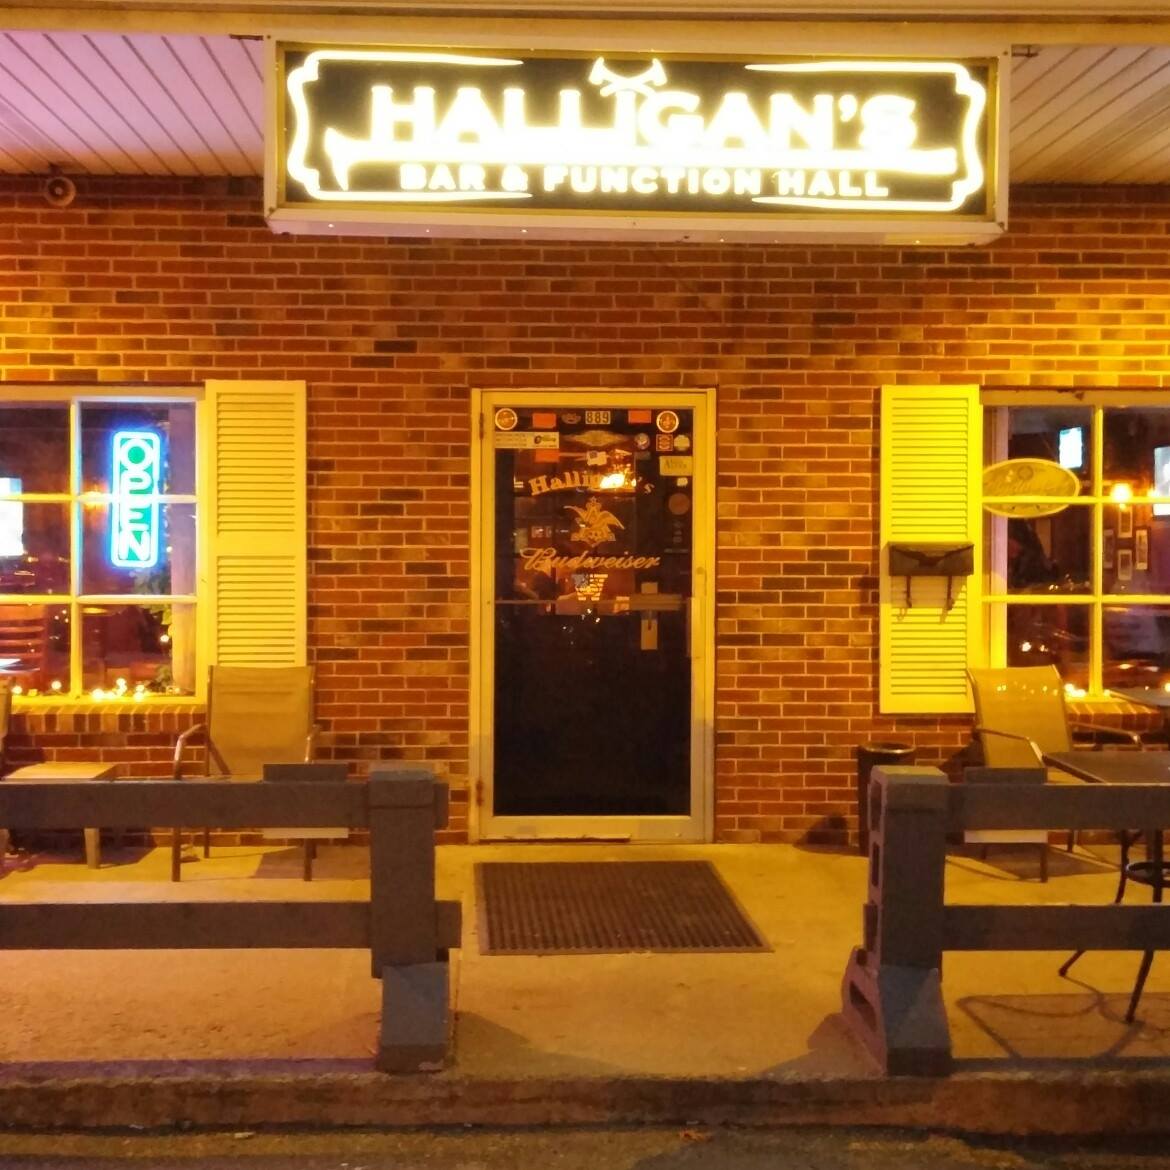 Halligan's Bar And Function Hall